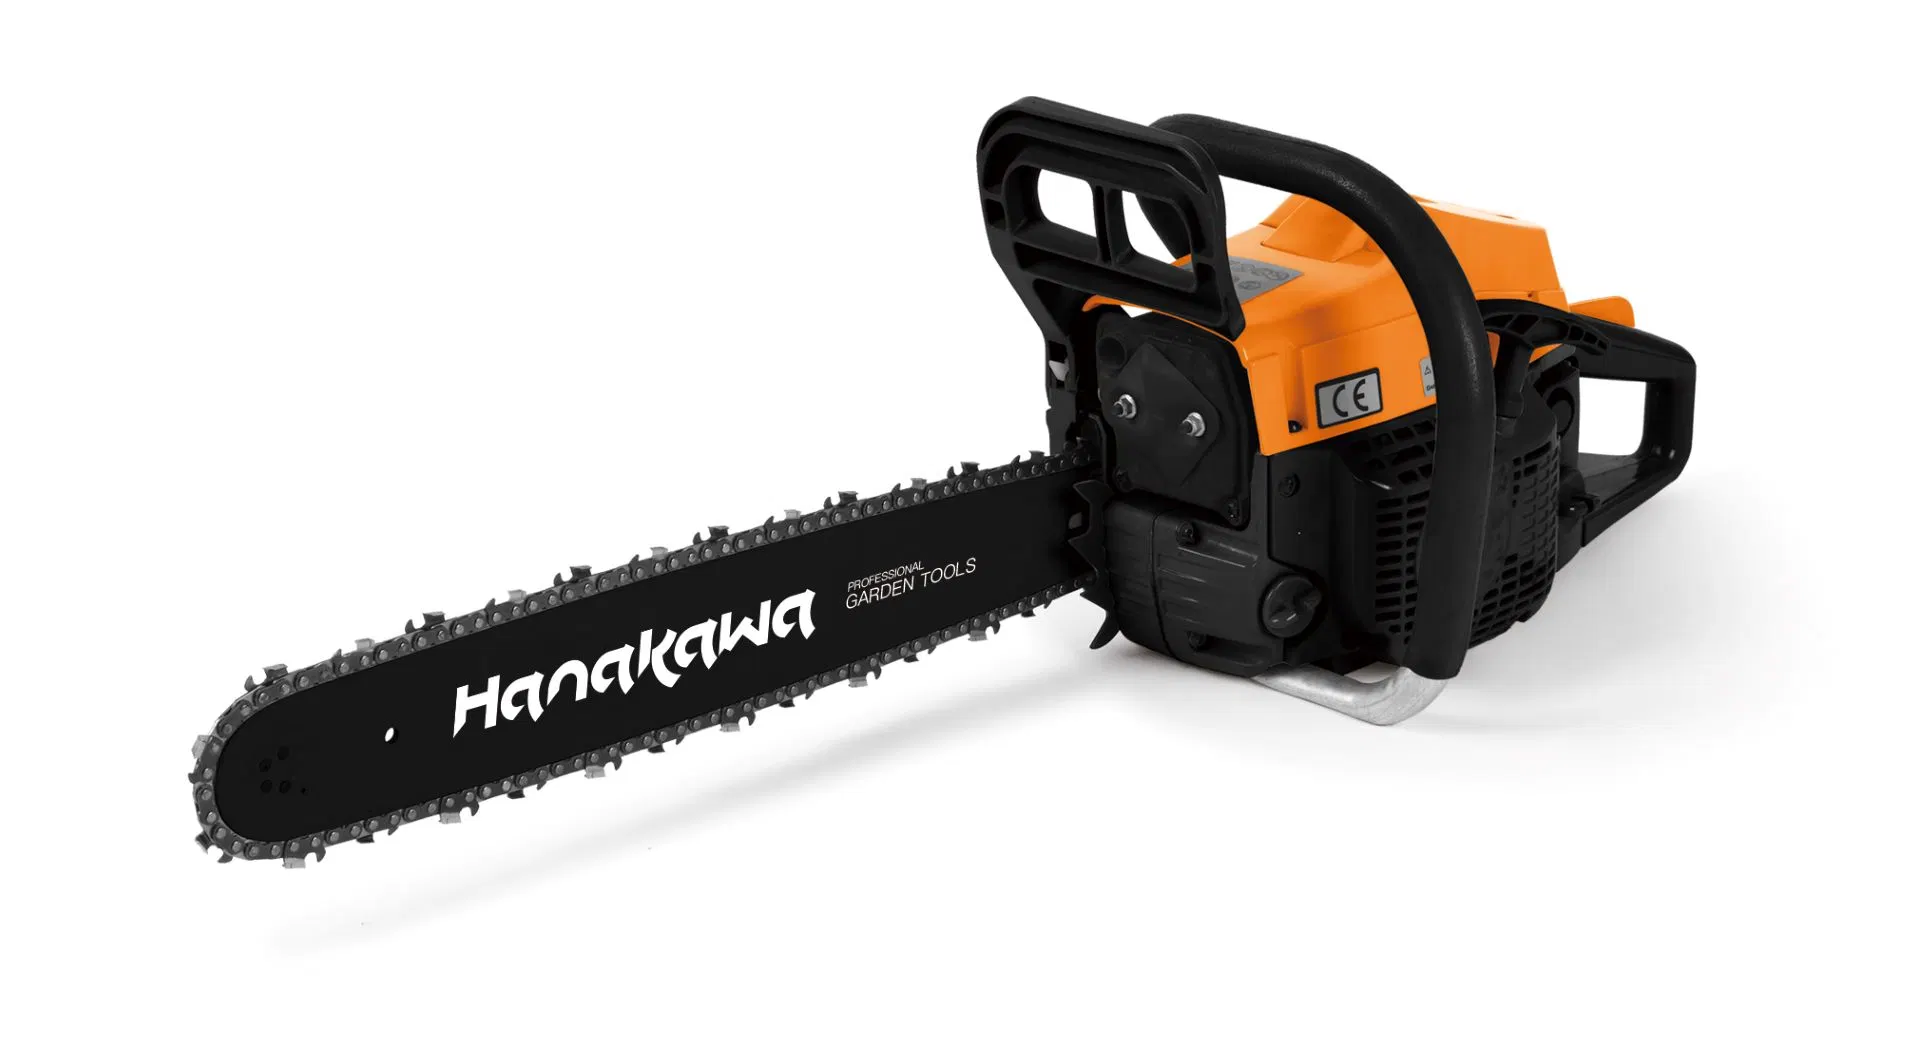 Hanakawa H758 (5800) 55cc Handheld Cordless Chainsaw Portable Garden Fruit Tree Pruning Saws Home Wood Cutting Machine